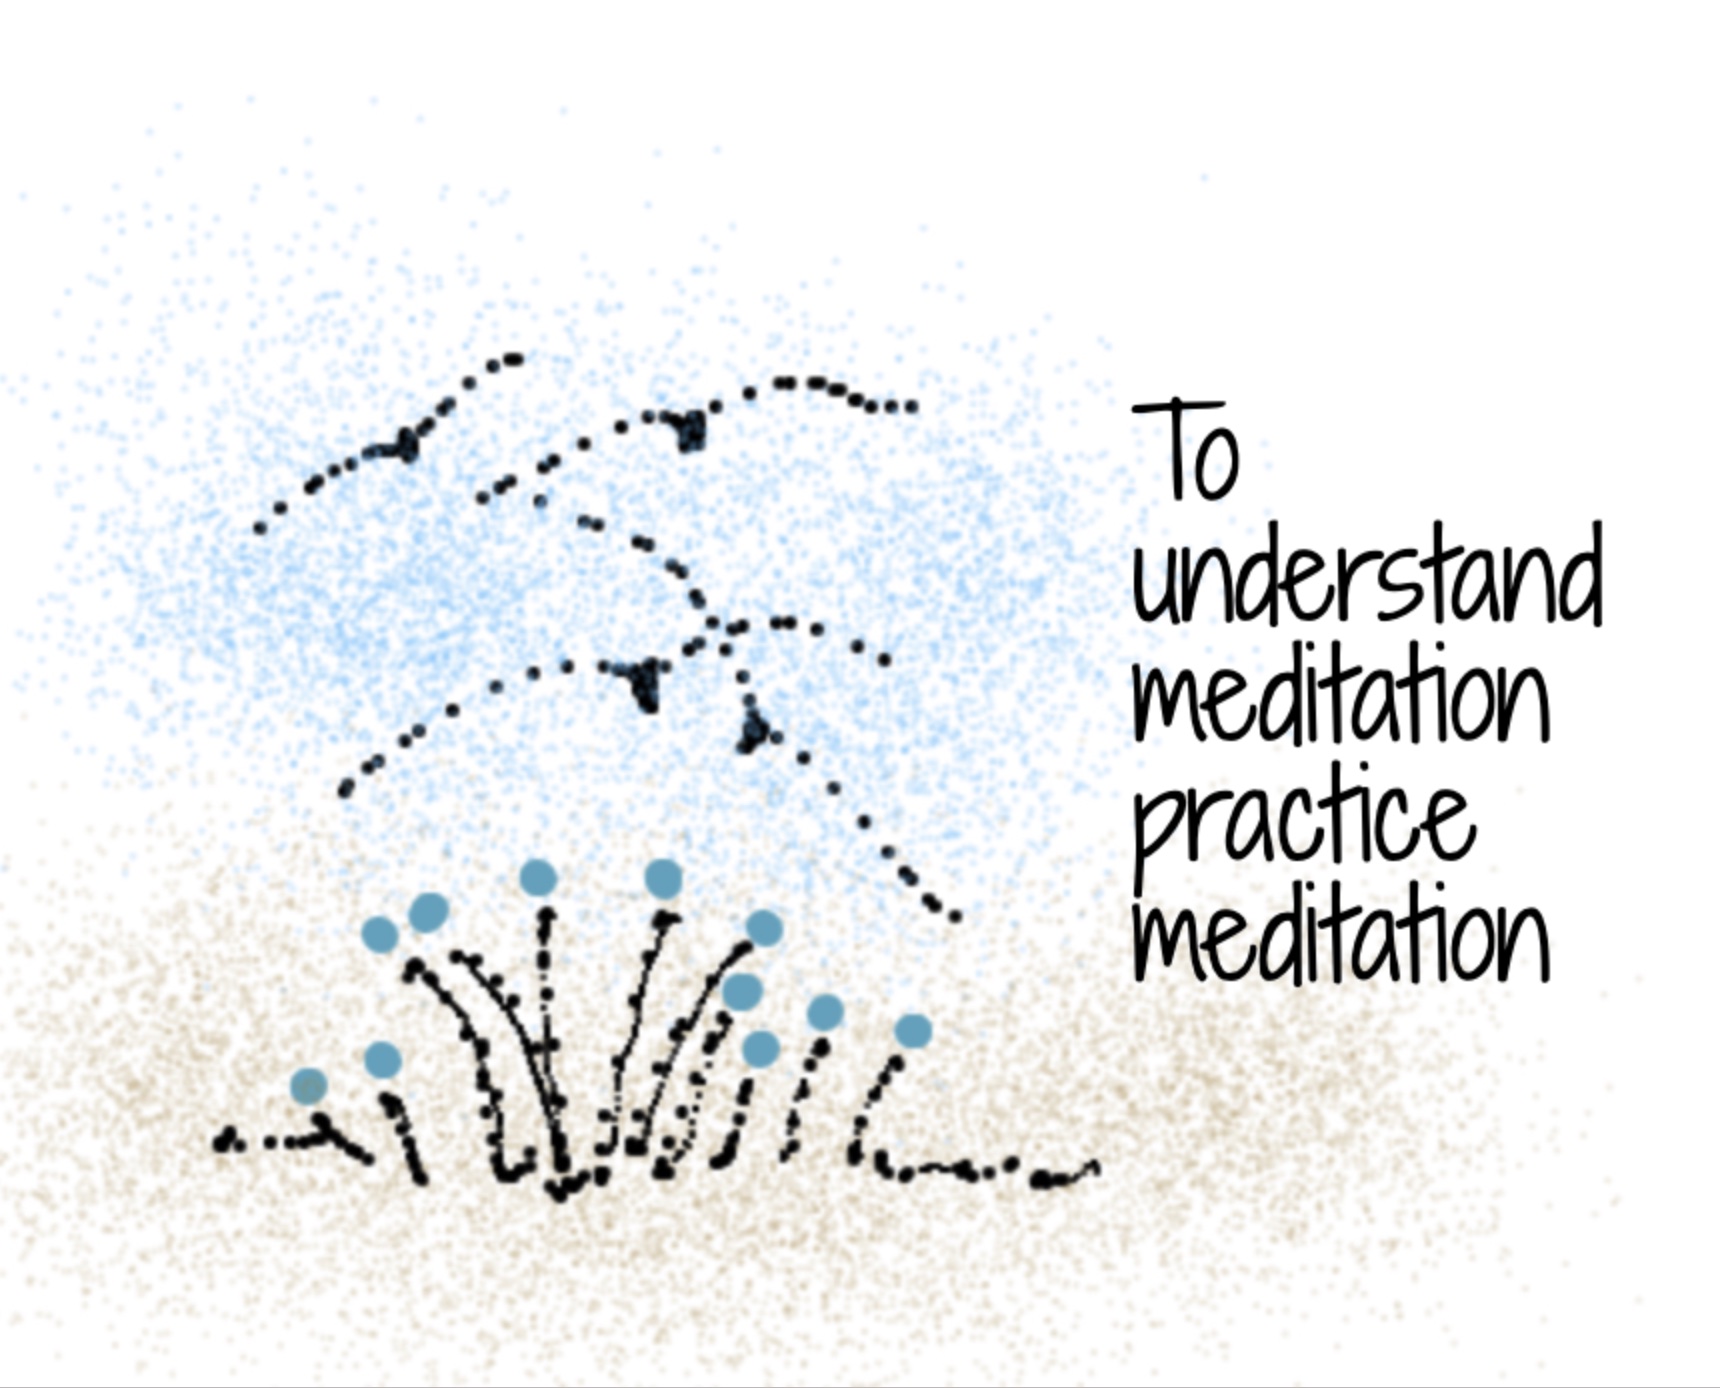 Understand meditation